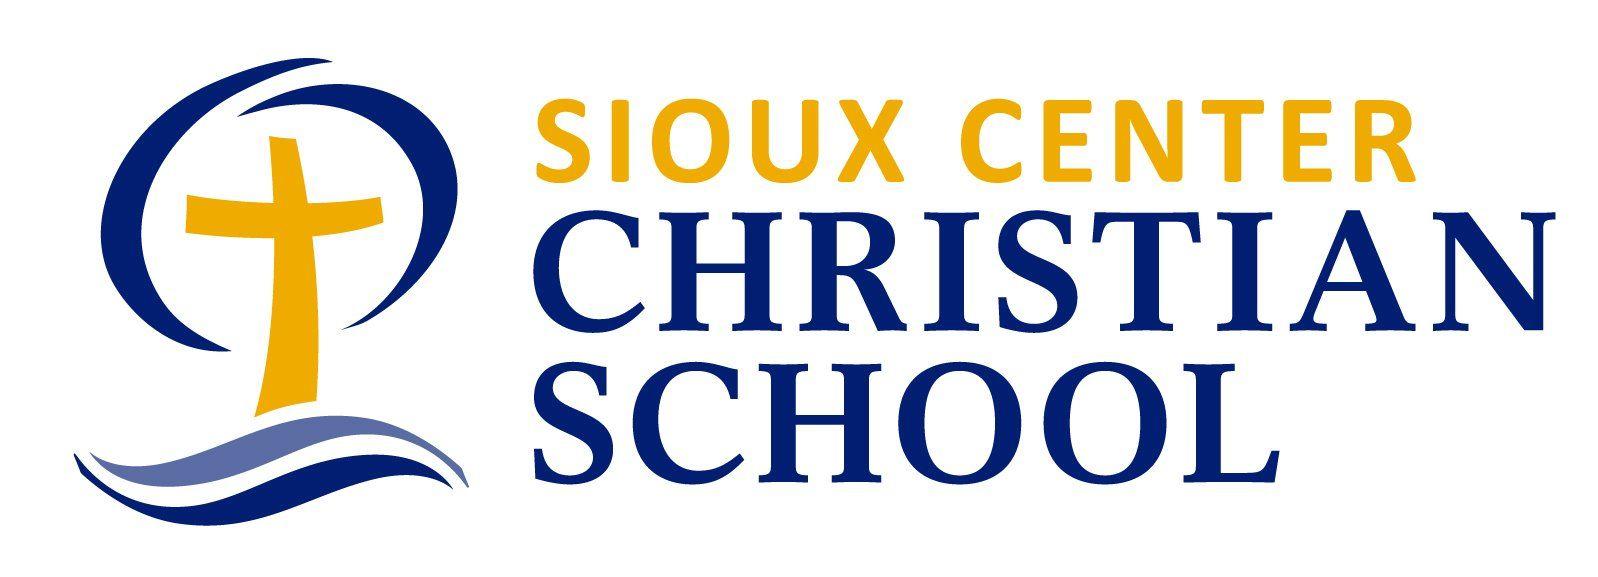 Christian Business Logo - Our Logos Center Christian School